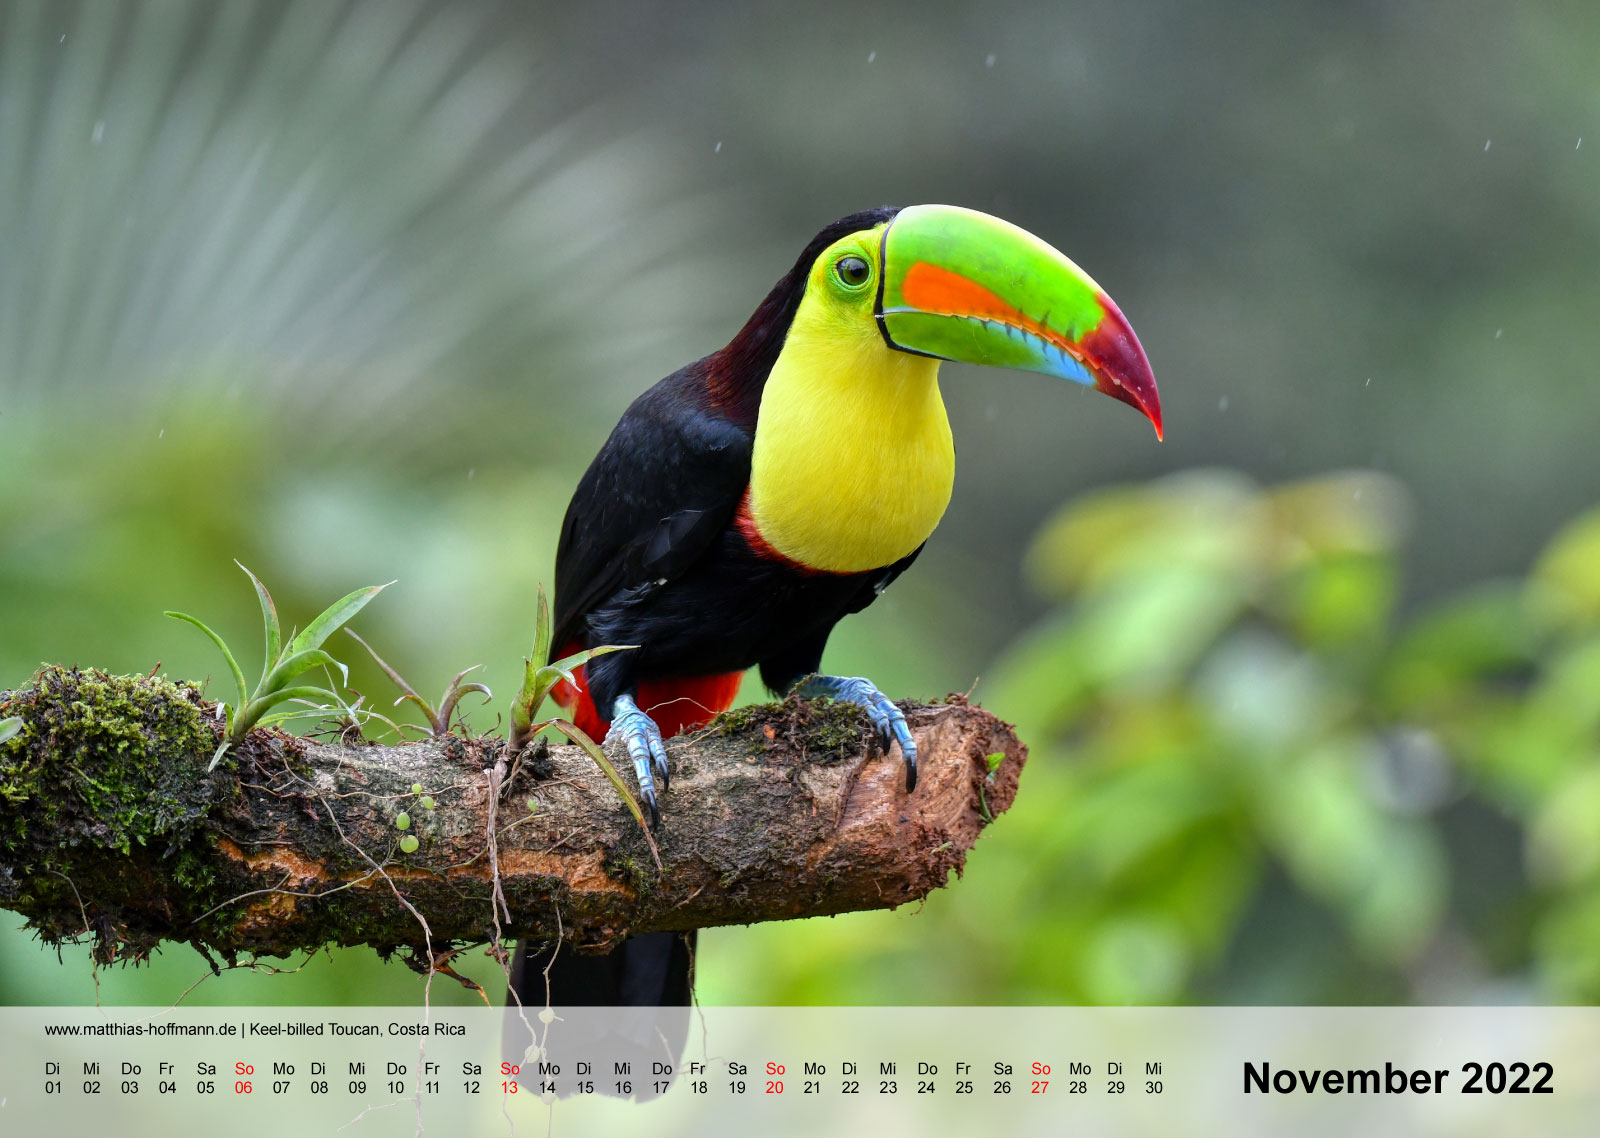 Keel-billed Toucan, Costa Rica | Kalender 2022 - November